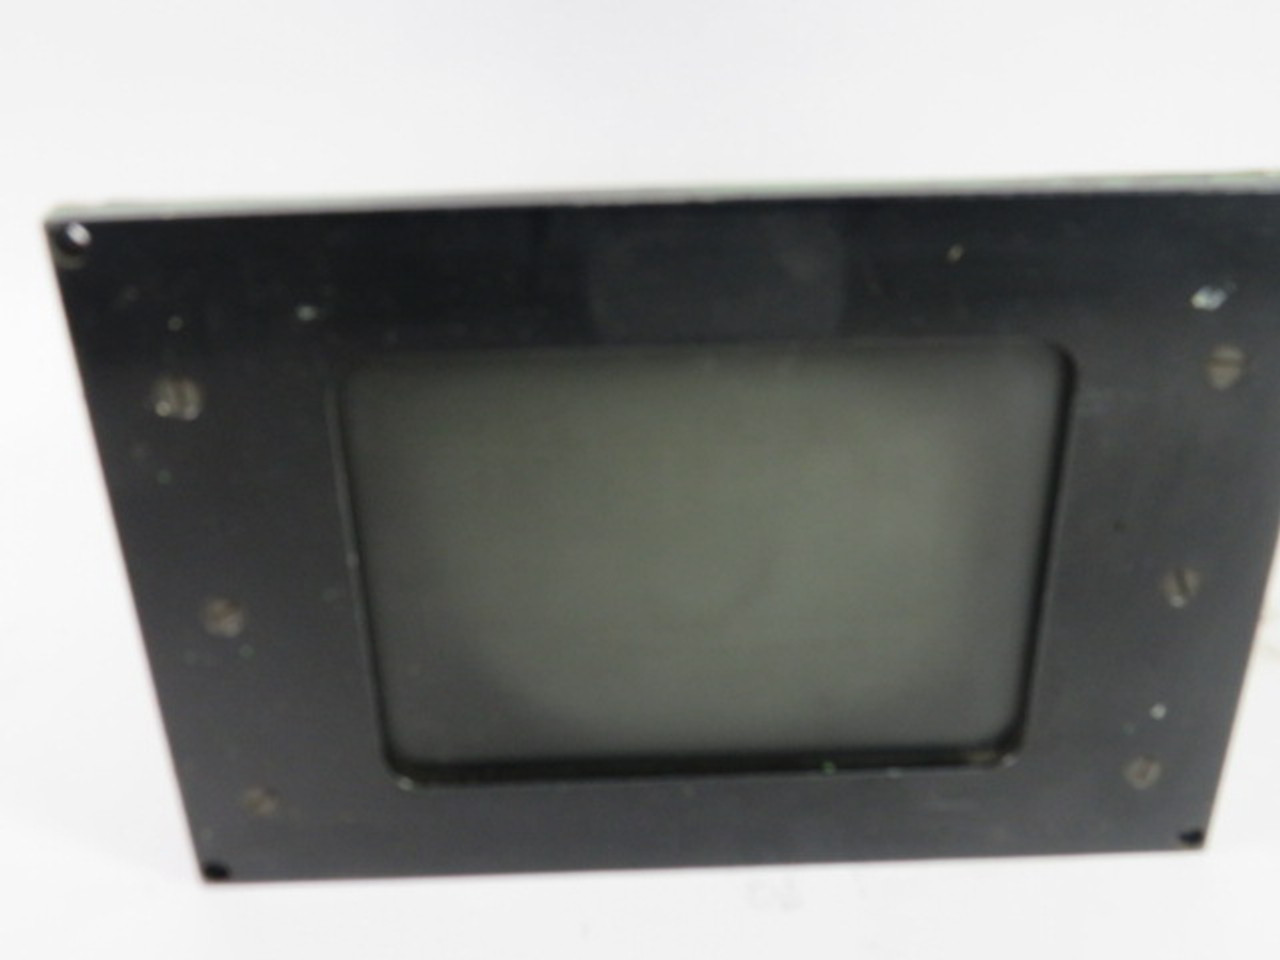 Motorola M2000-155 Industrial CRT Display Monitor 6x9" Screen USED